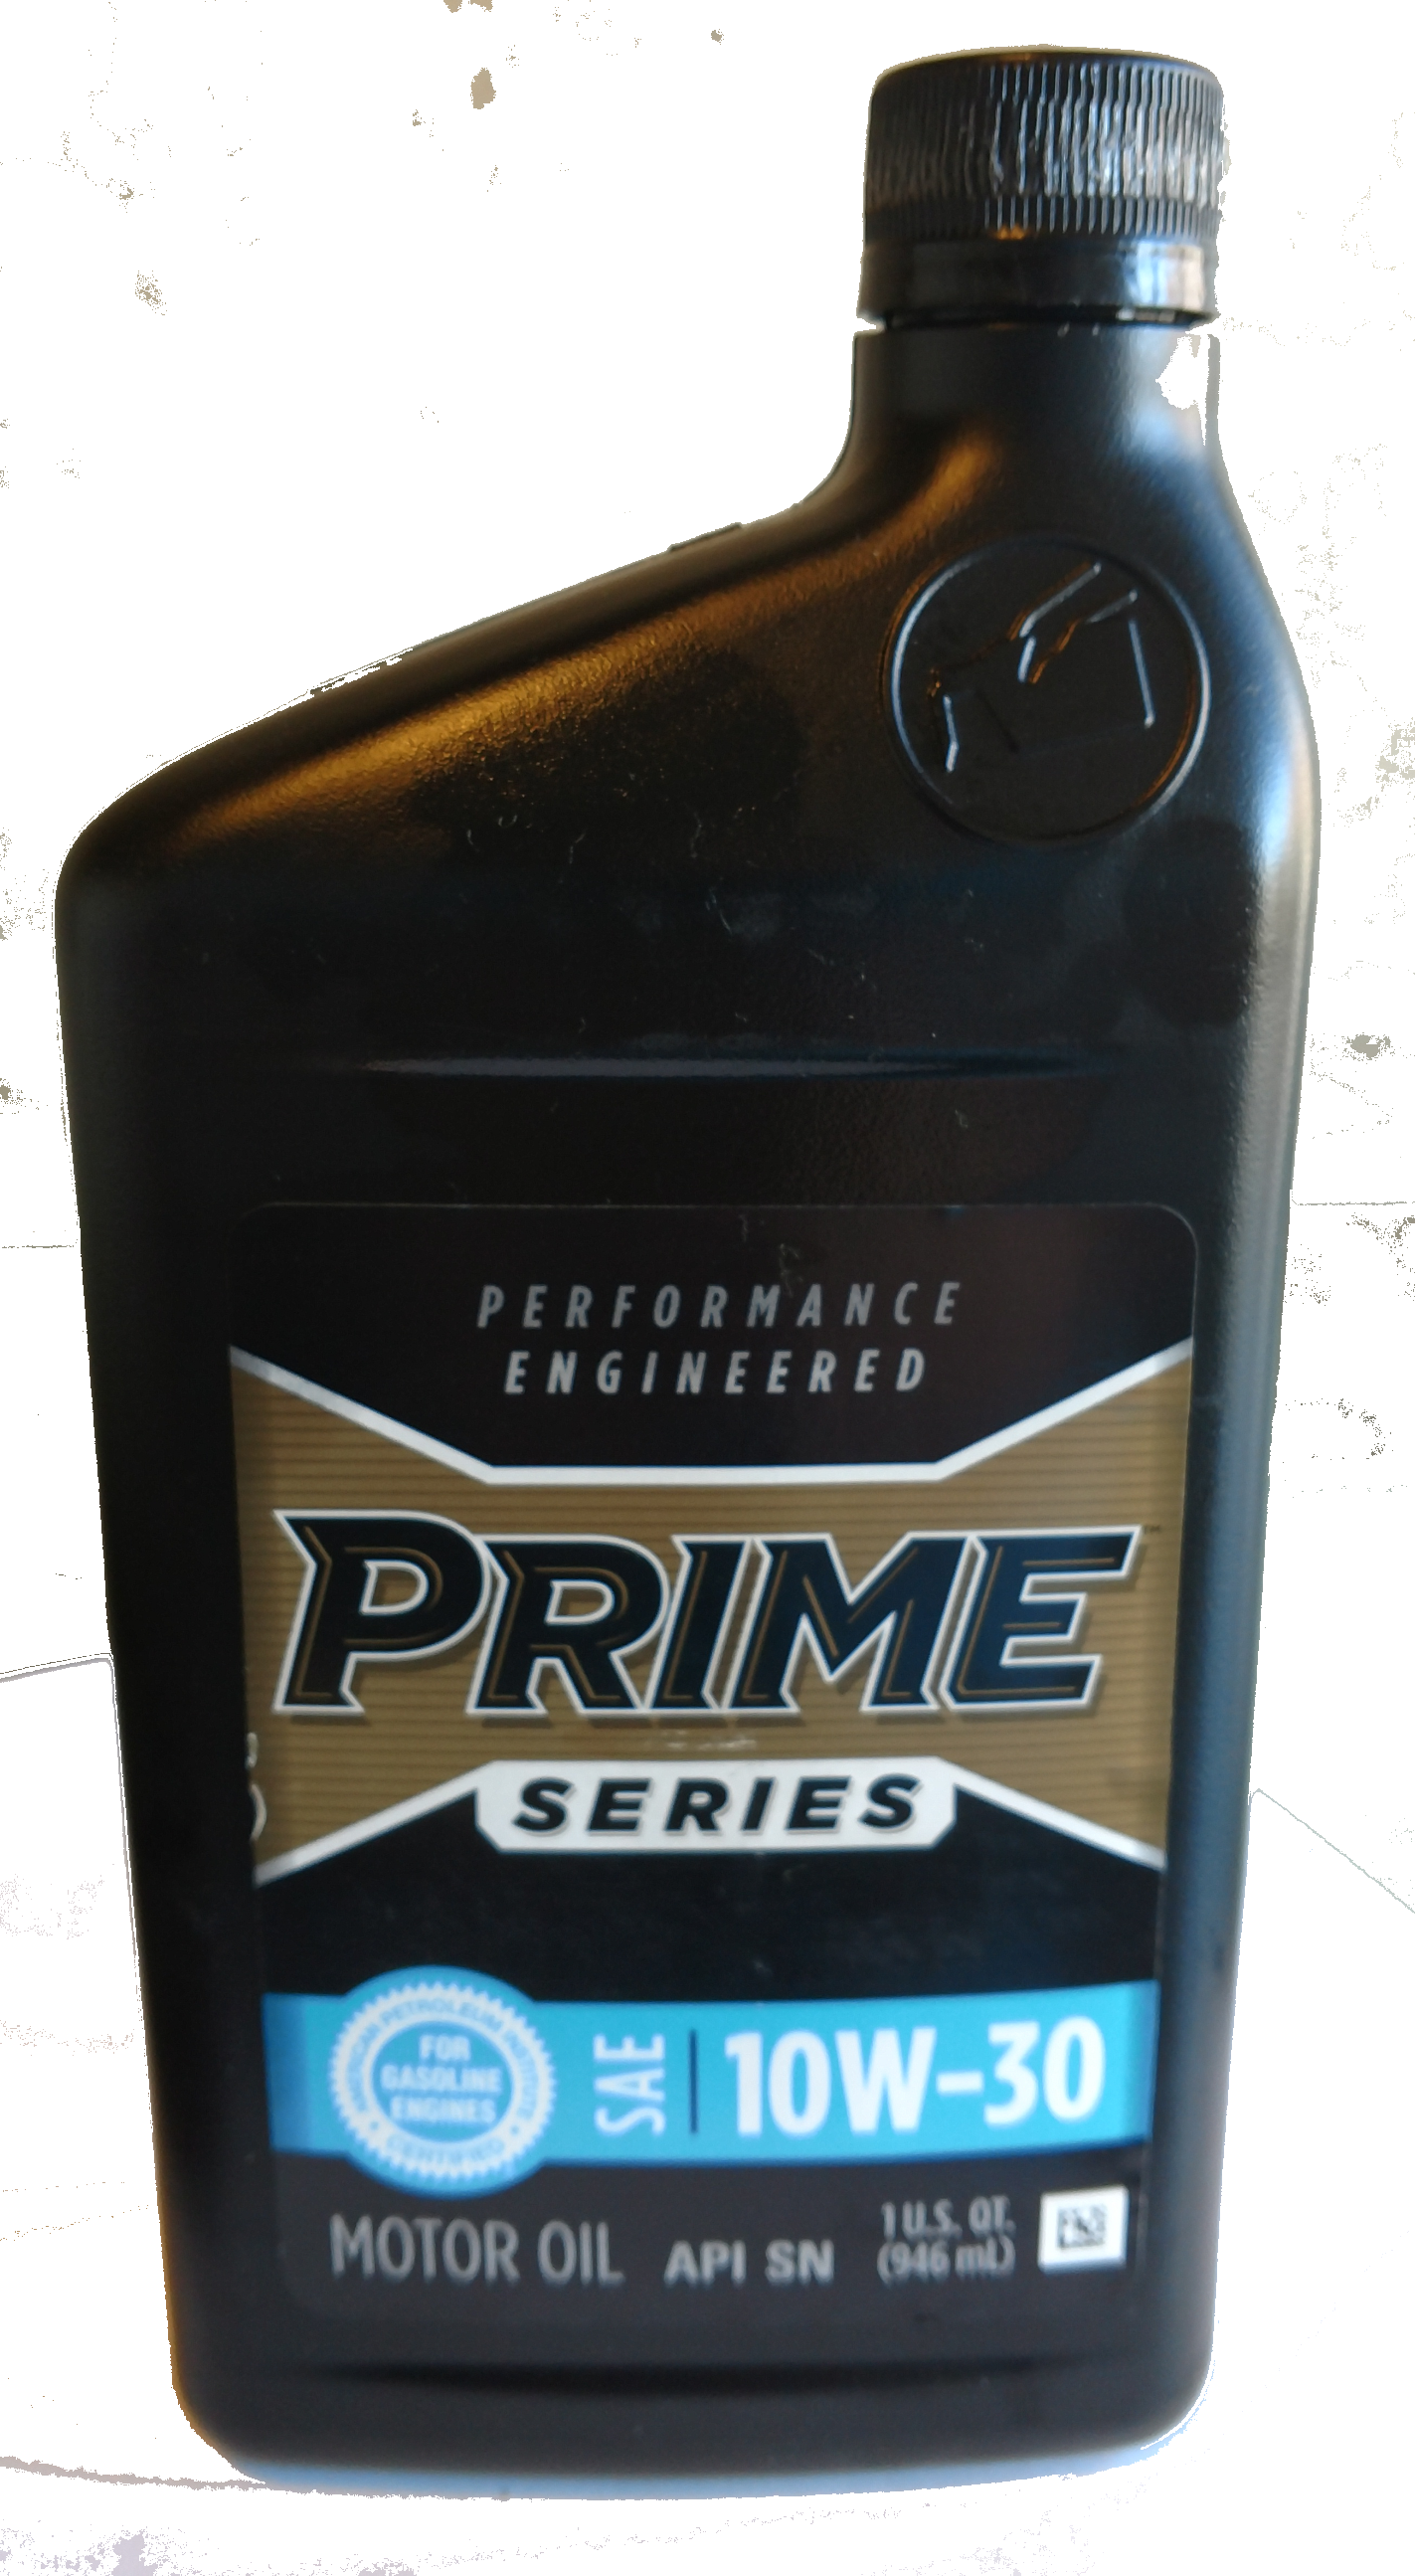 Prime Series 10W-30 Motor oil